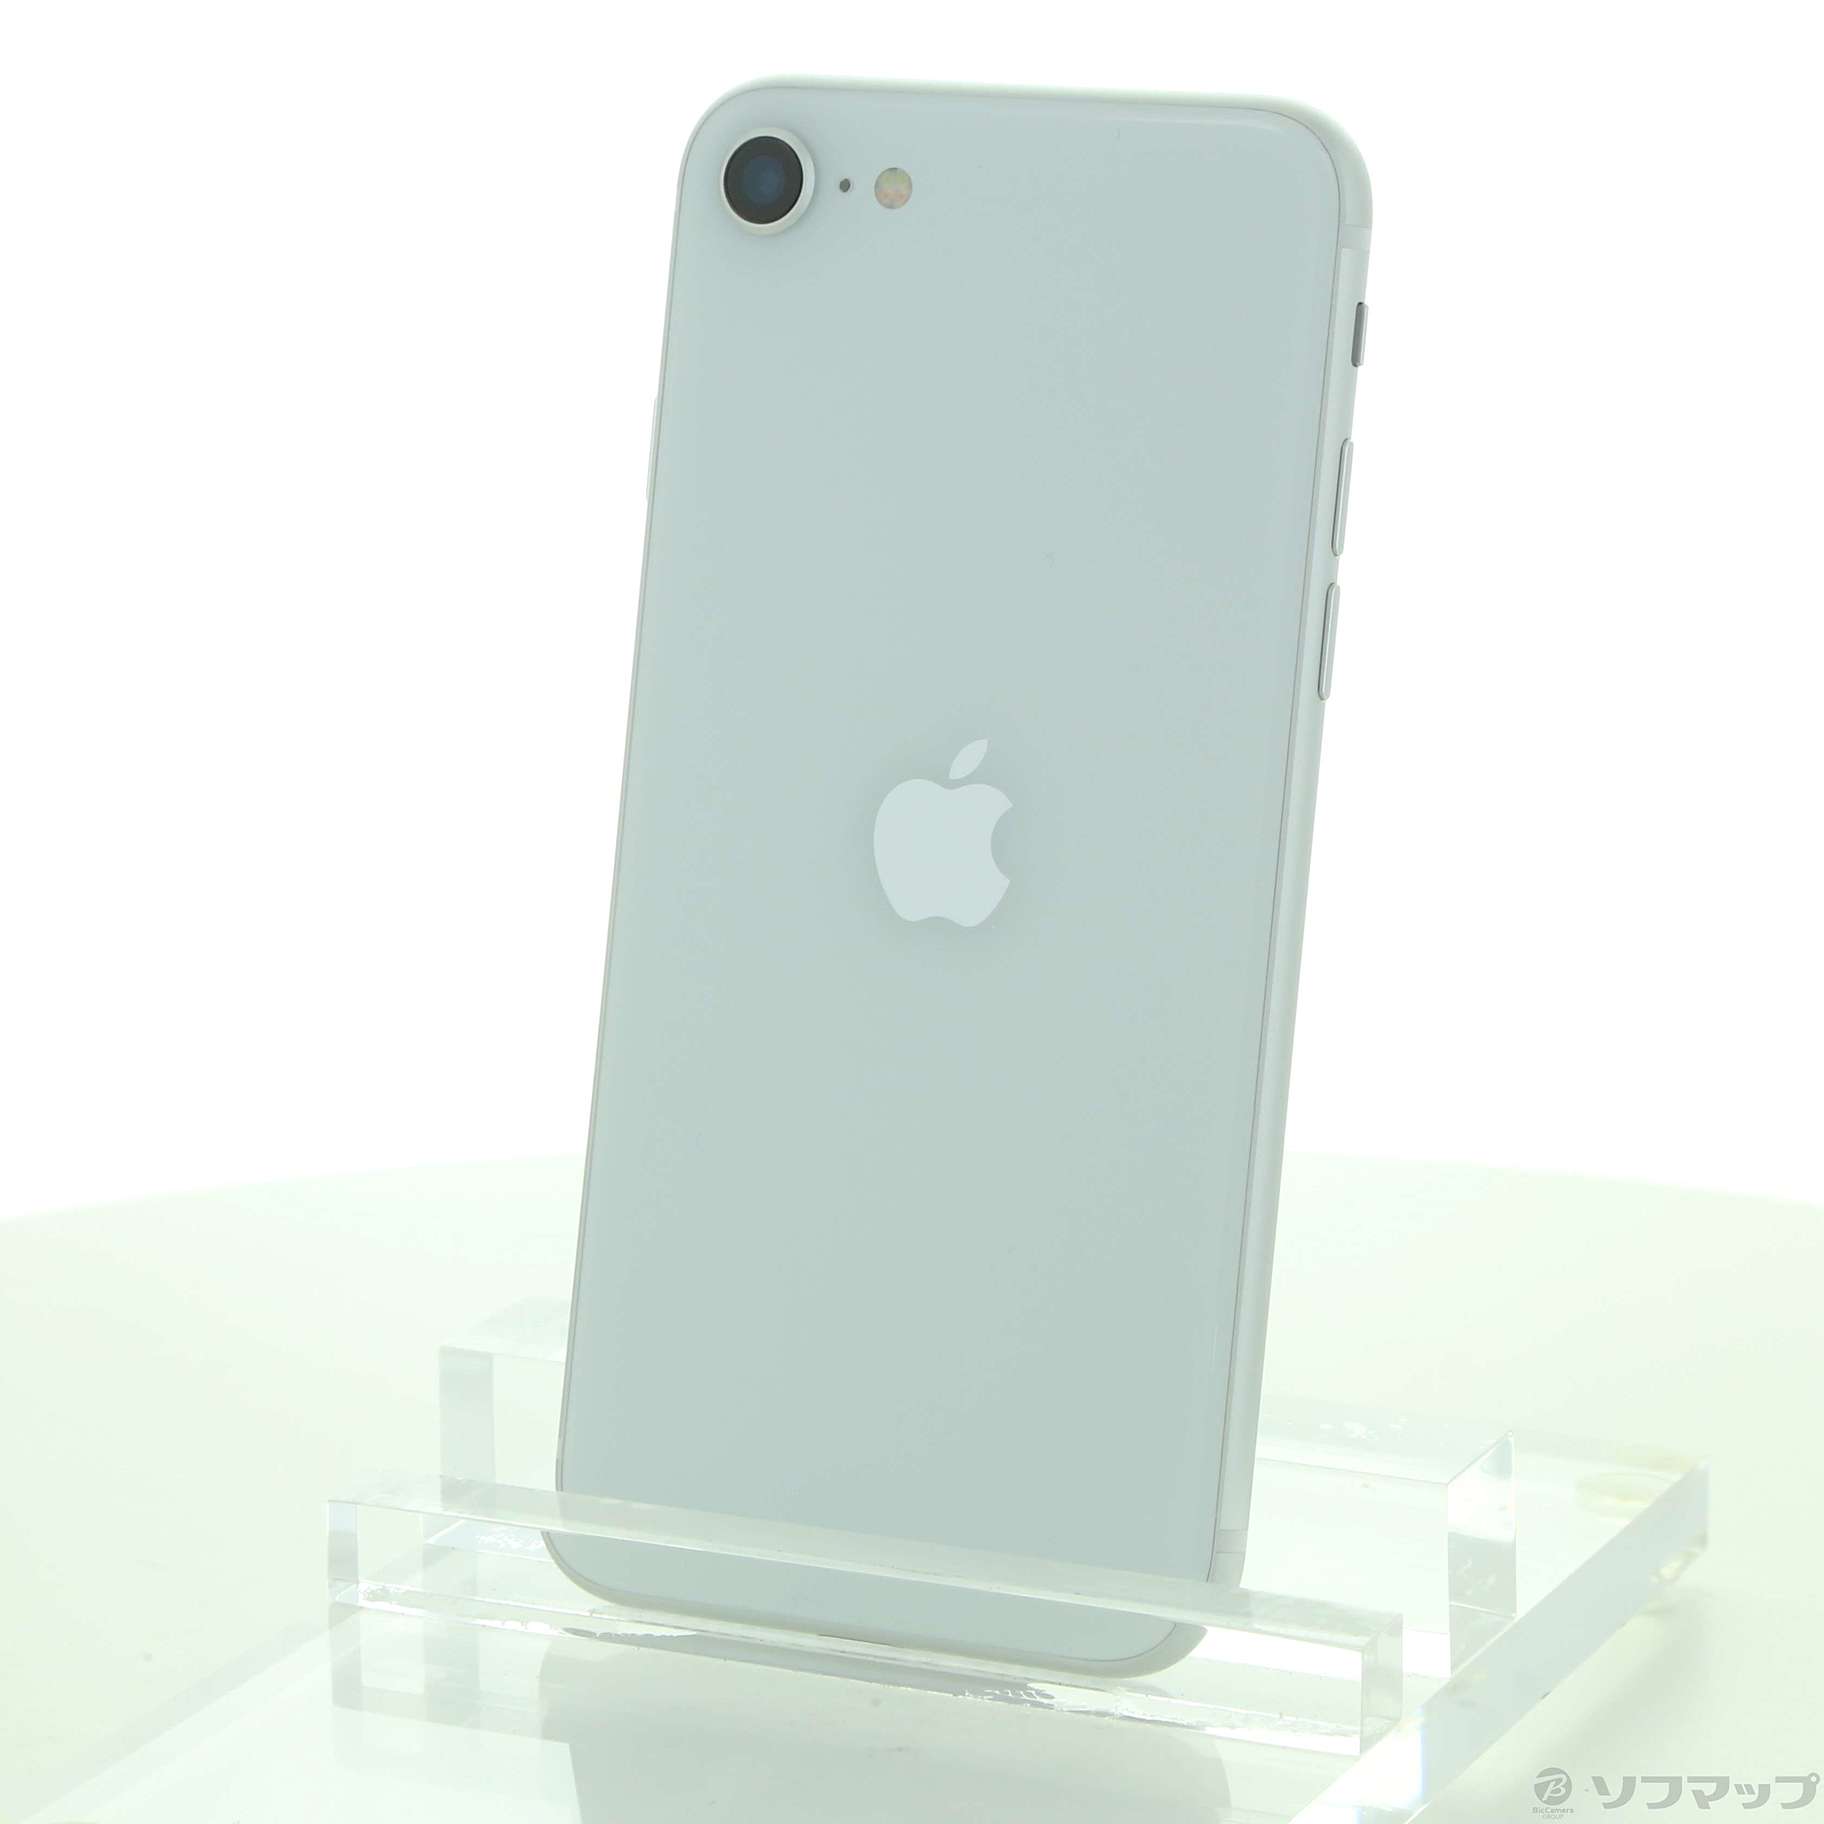 Apple iPhone SE 第2世代 64GB ブラック MHGP3J/A+inforsante.fr